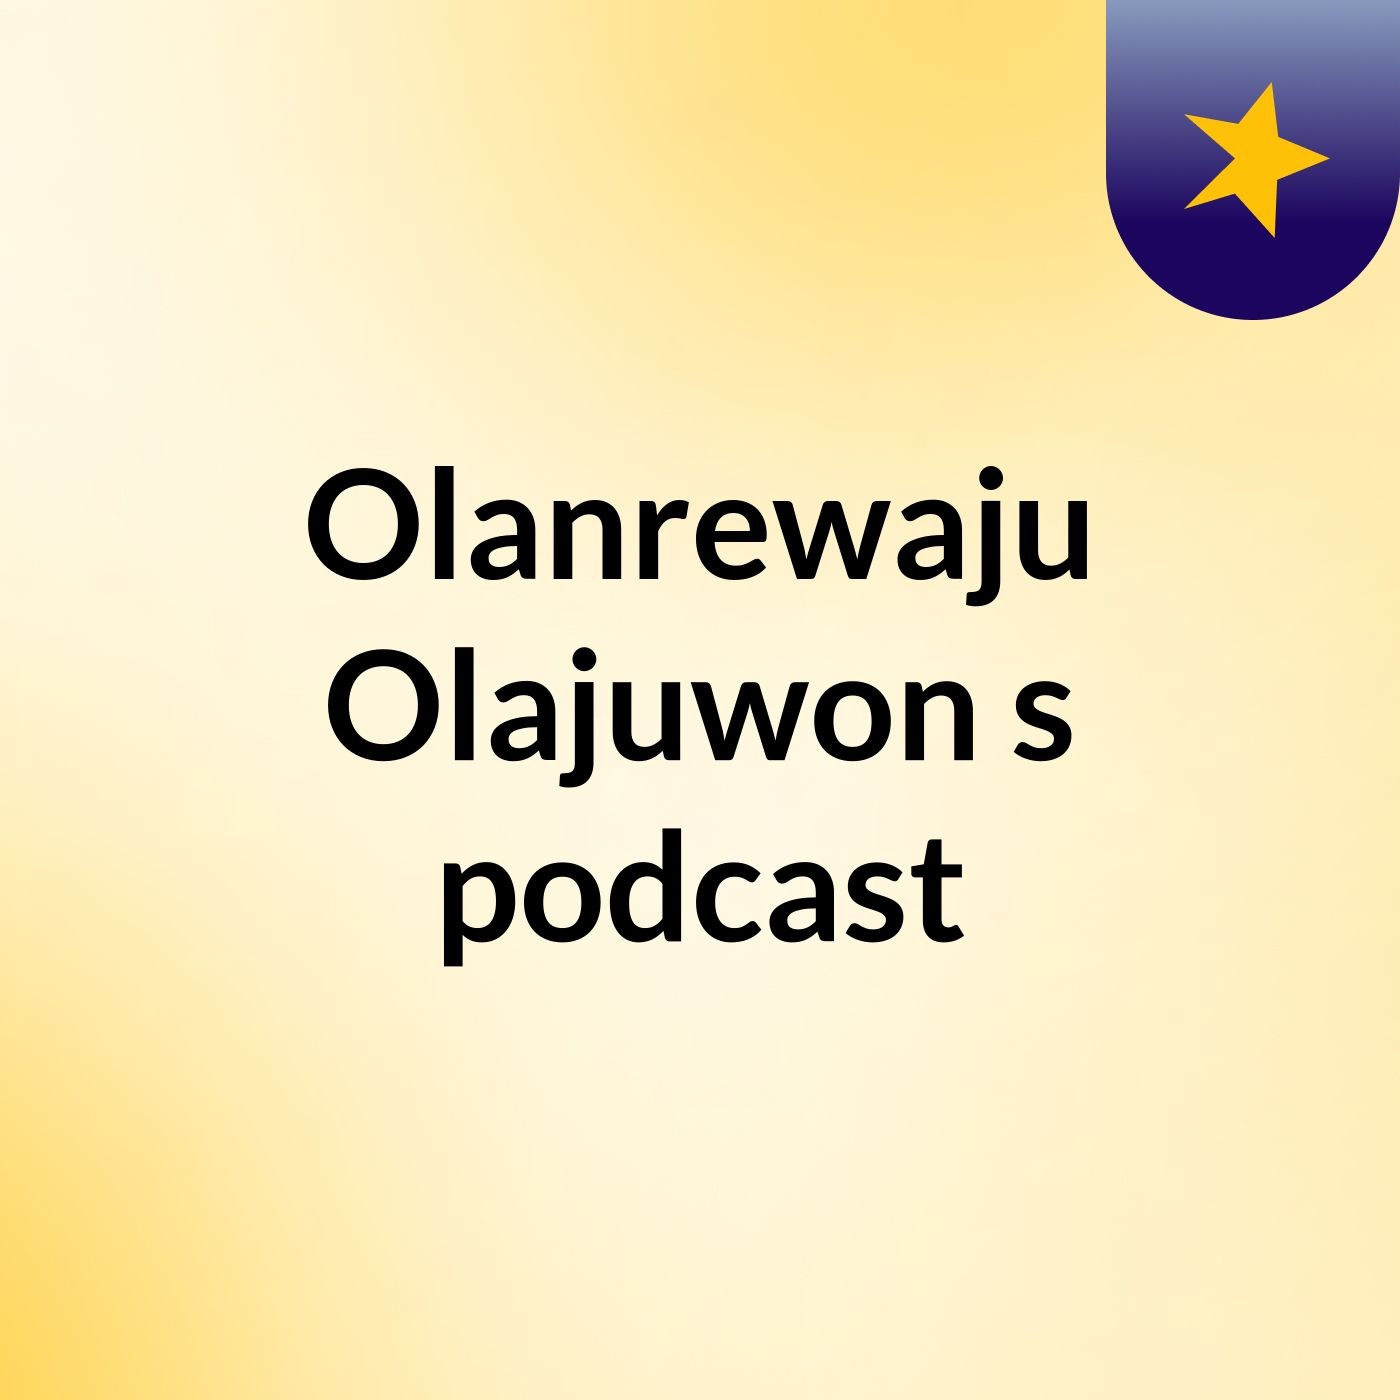 Olanrewaju Olajuwon's podcast